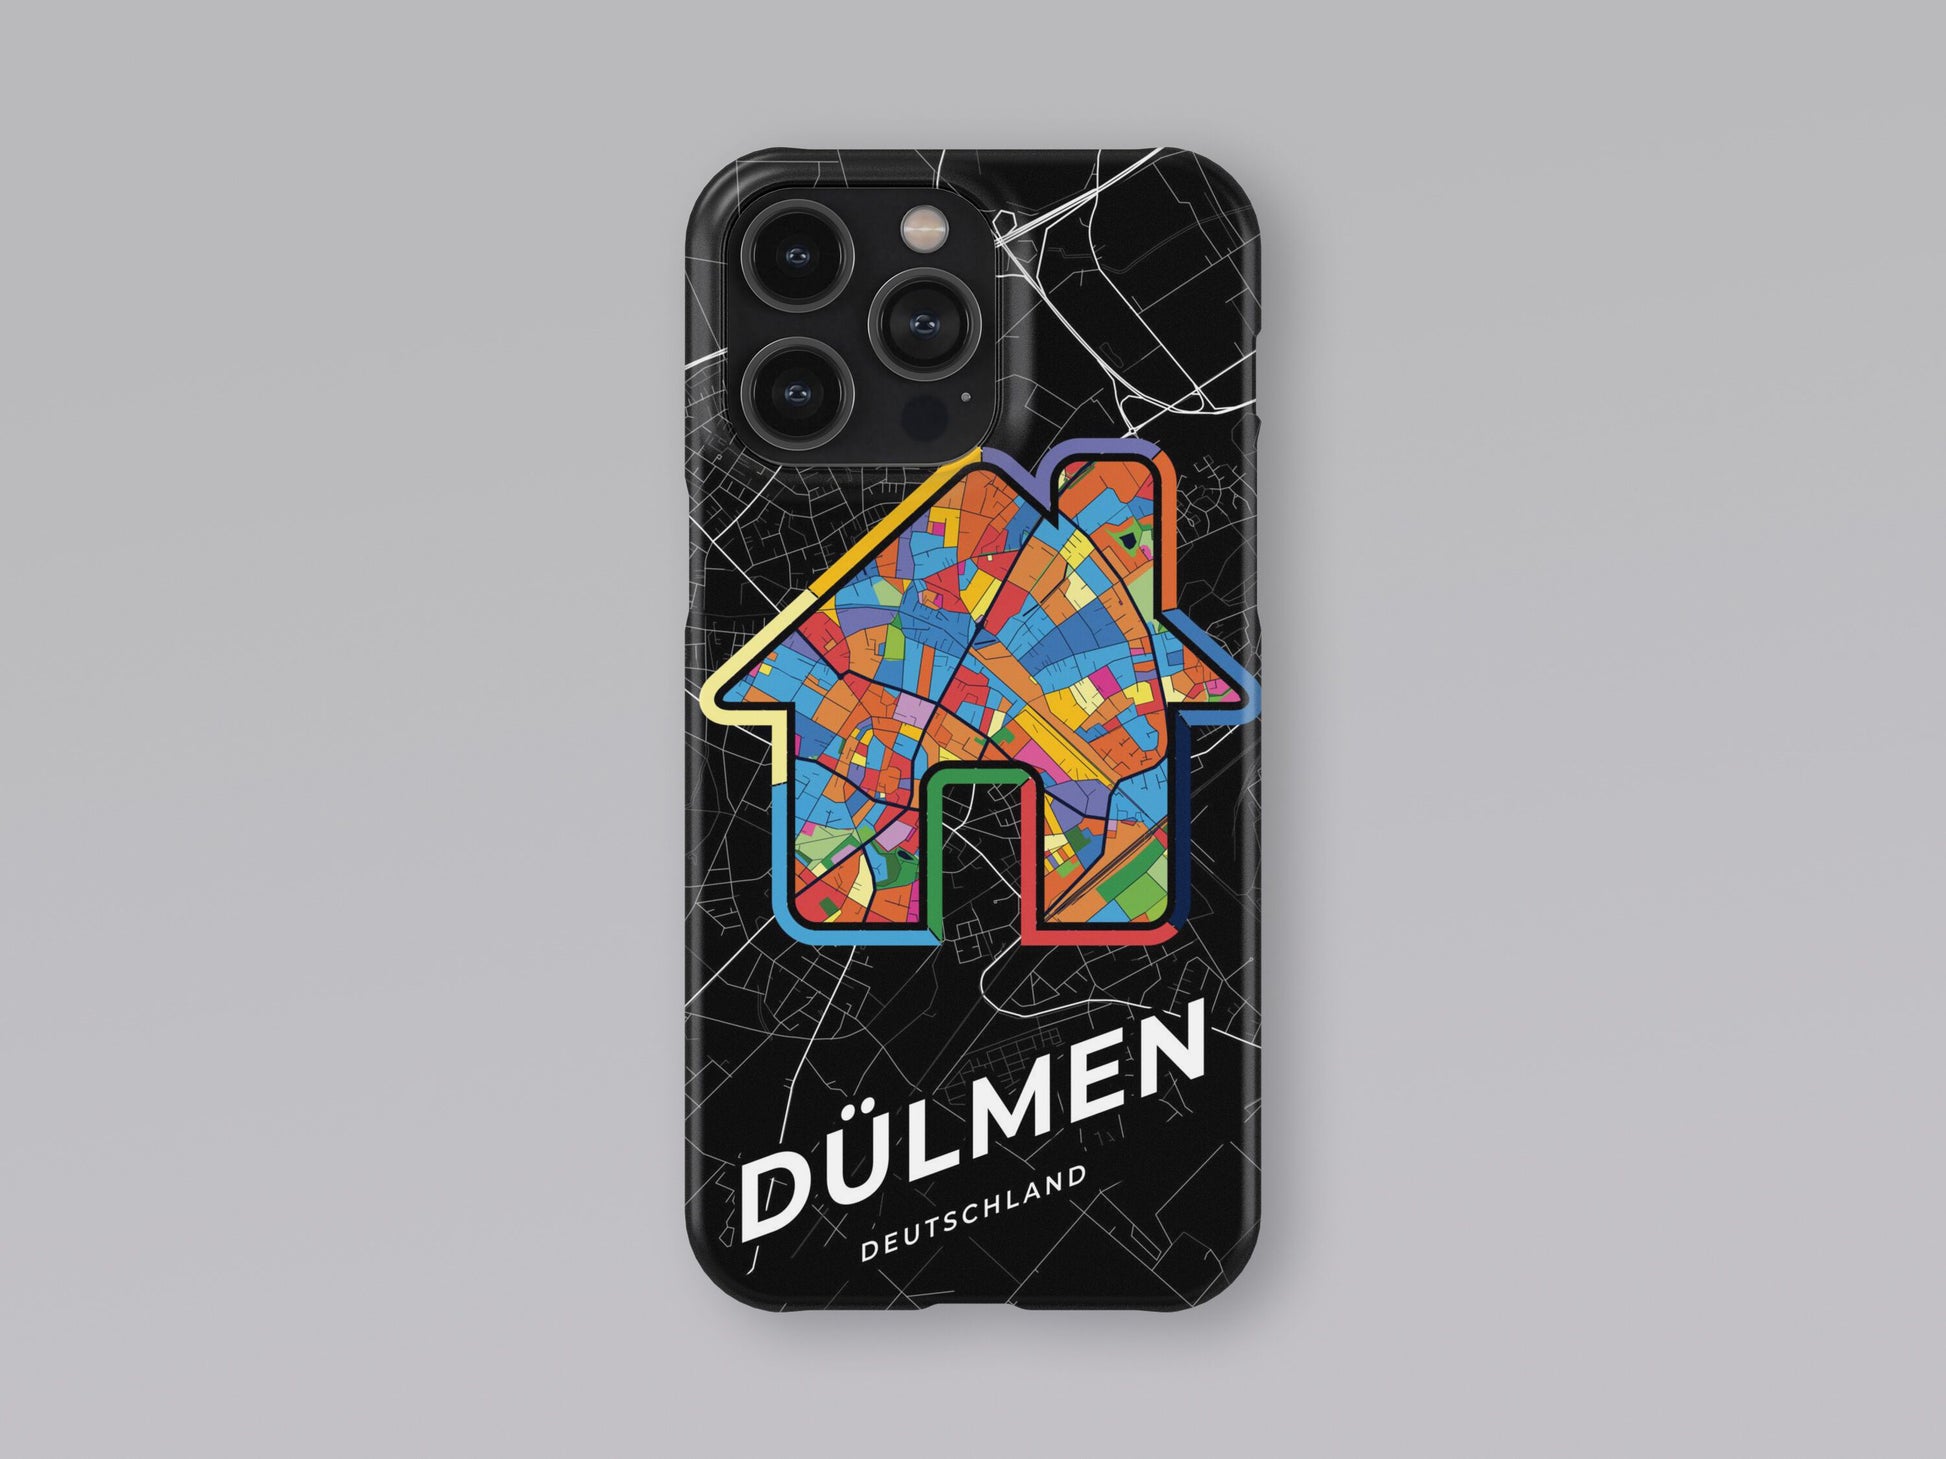 Dülmen Deutschland slim phone case with colorful icon. Birthday, wedding or housewarming gift. Couple match cases. 3